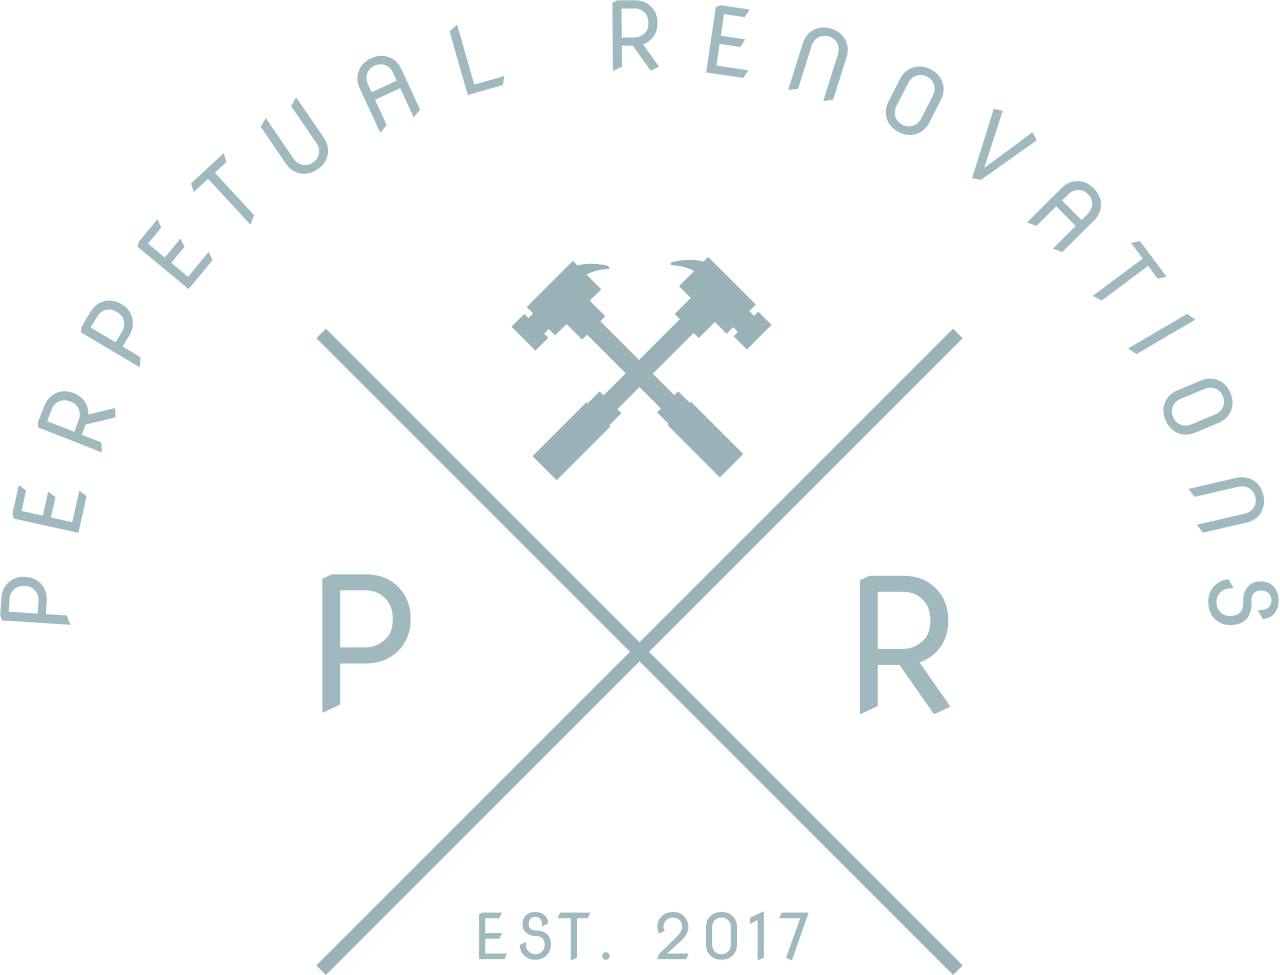 Perpetual Renovations's web page